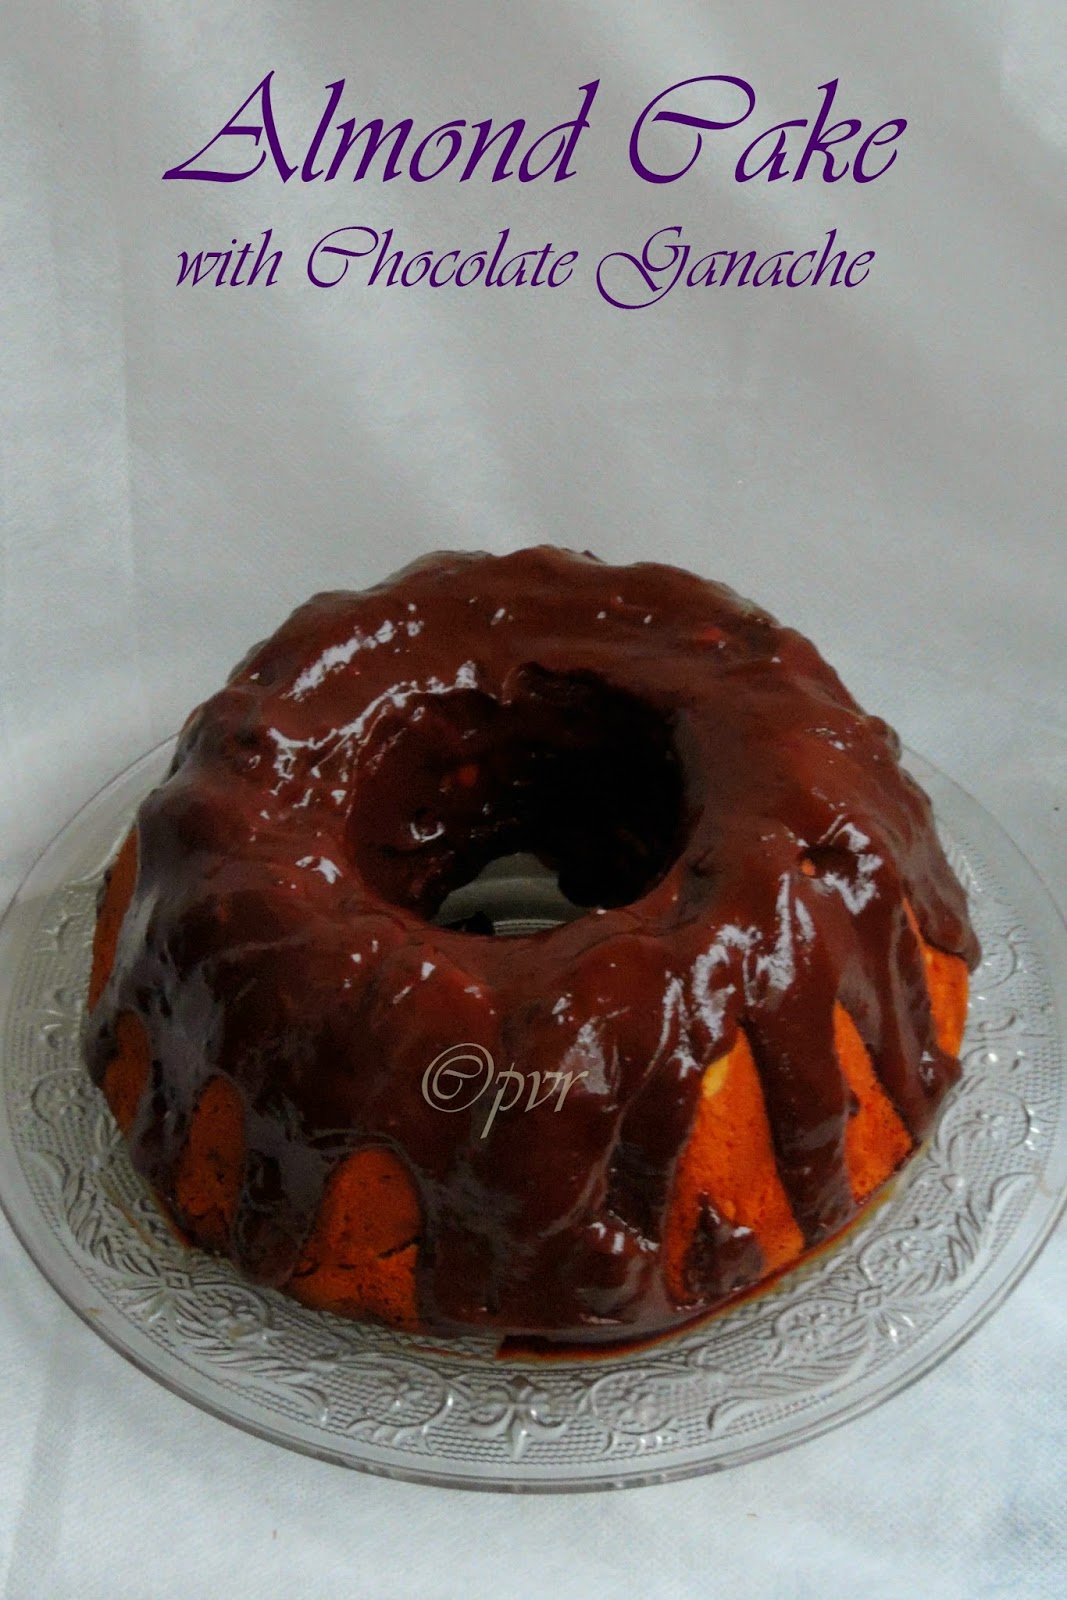 Almond cake, Almond cake with chocolate ganache